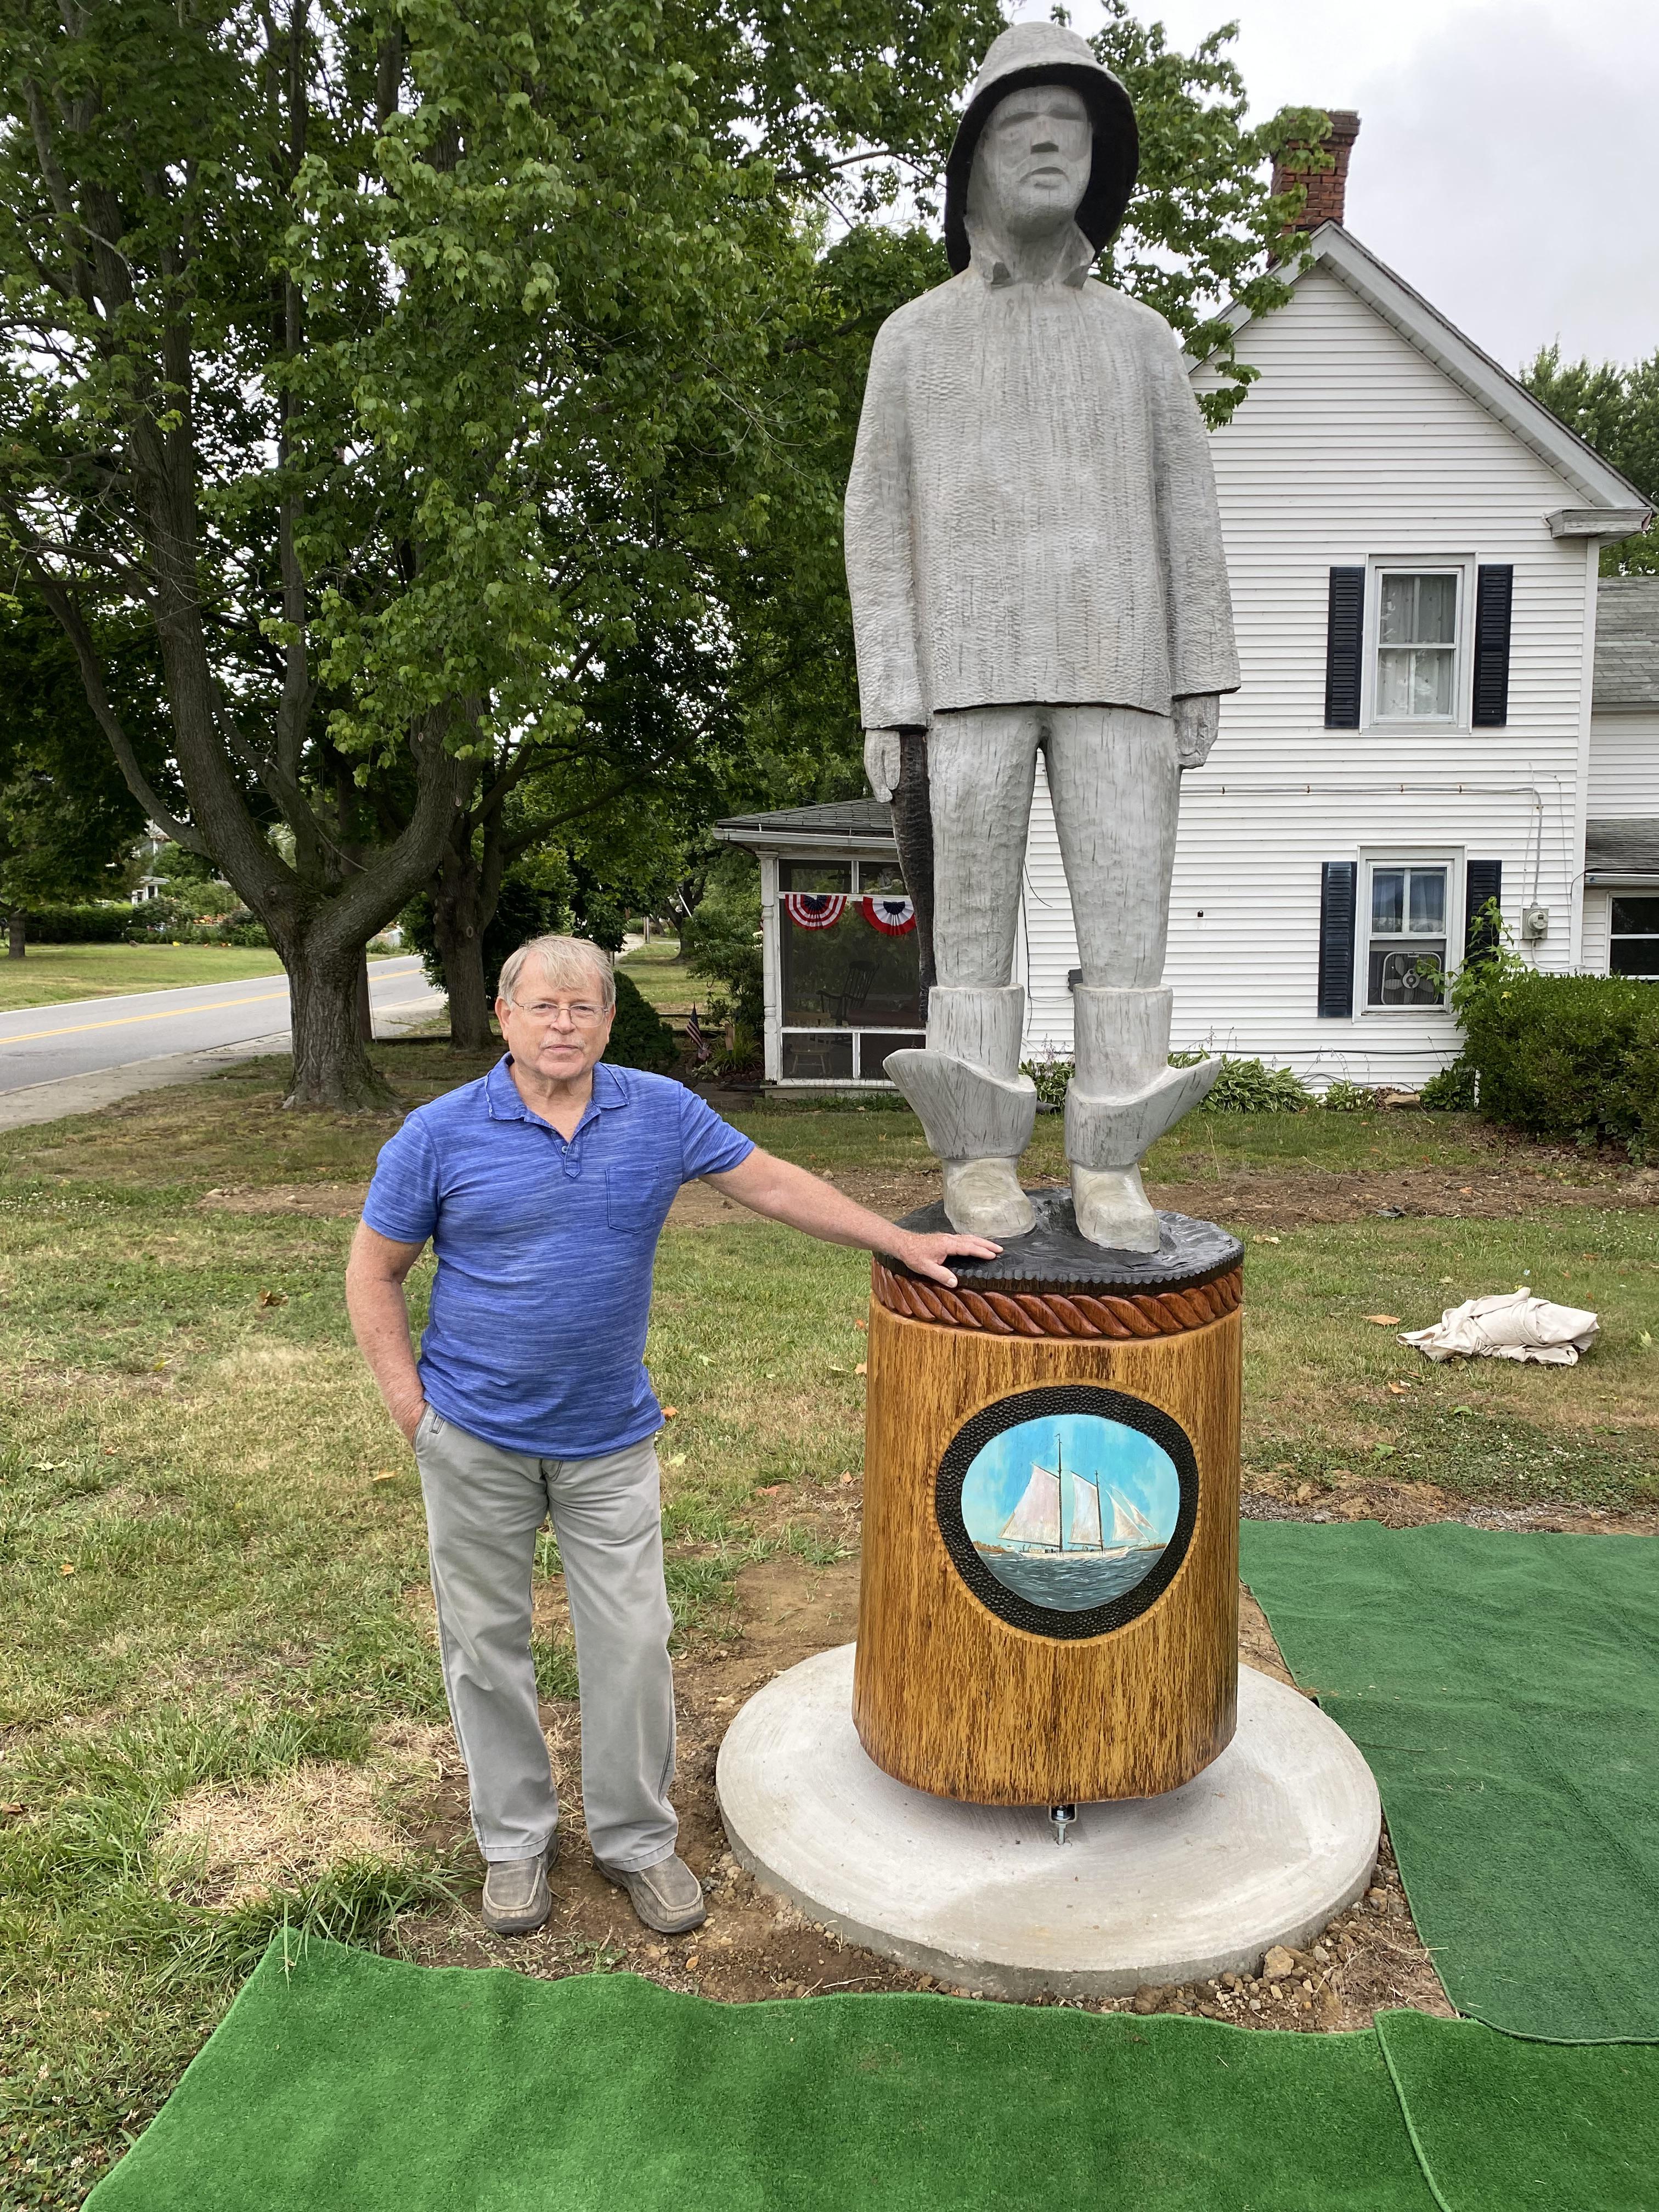 The restoration artist John Elburn proudly stands next to the restored Old Salt sculpture